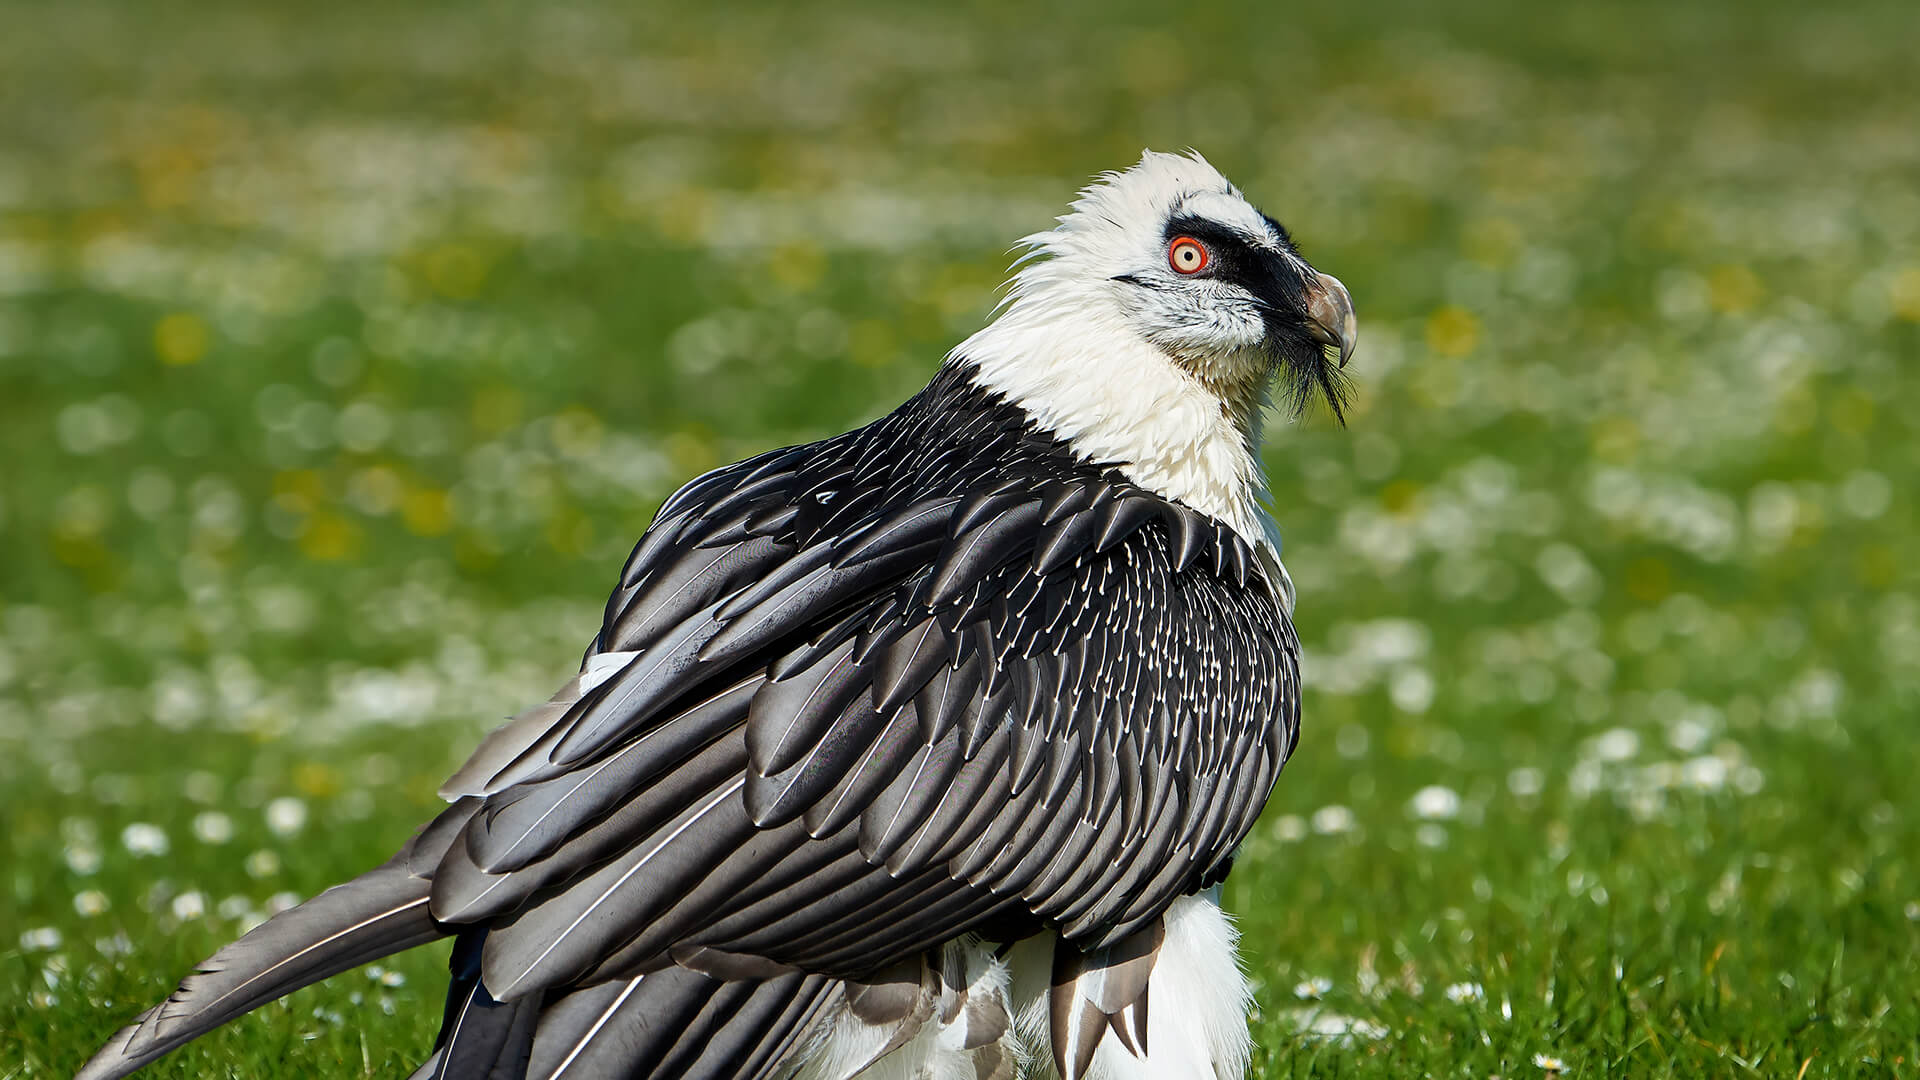 Bearded vulture (Gypaetus barbatus)